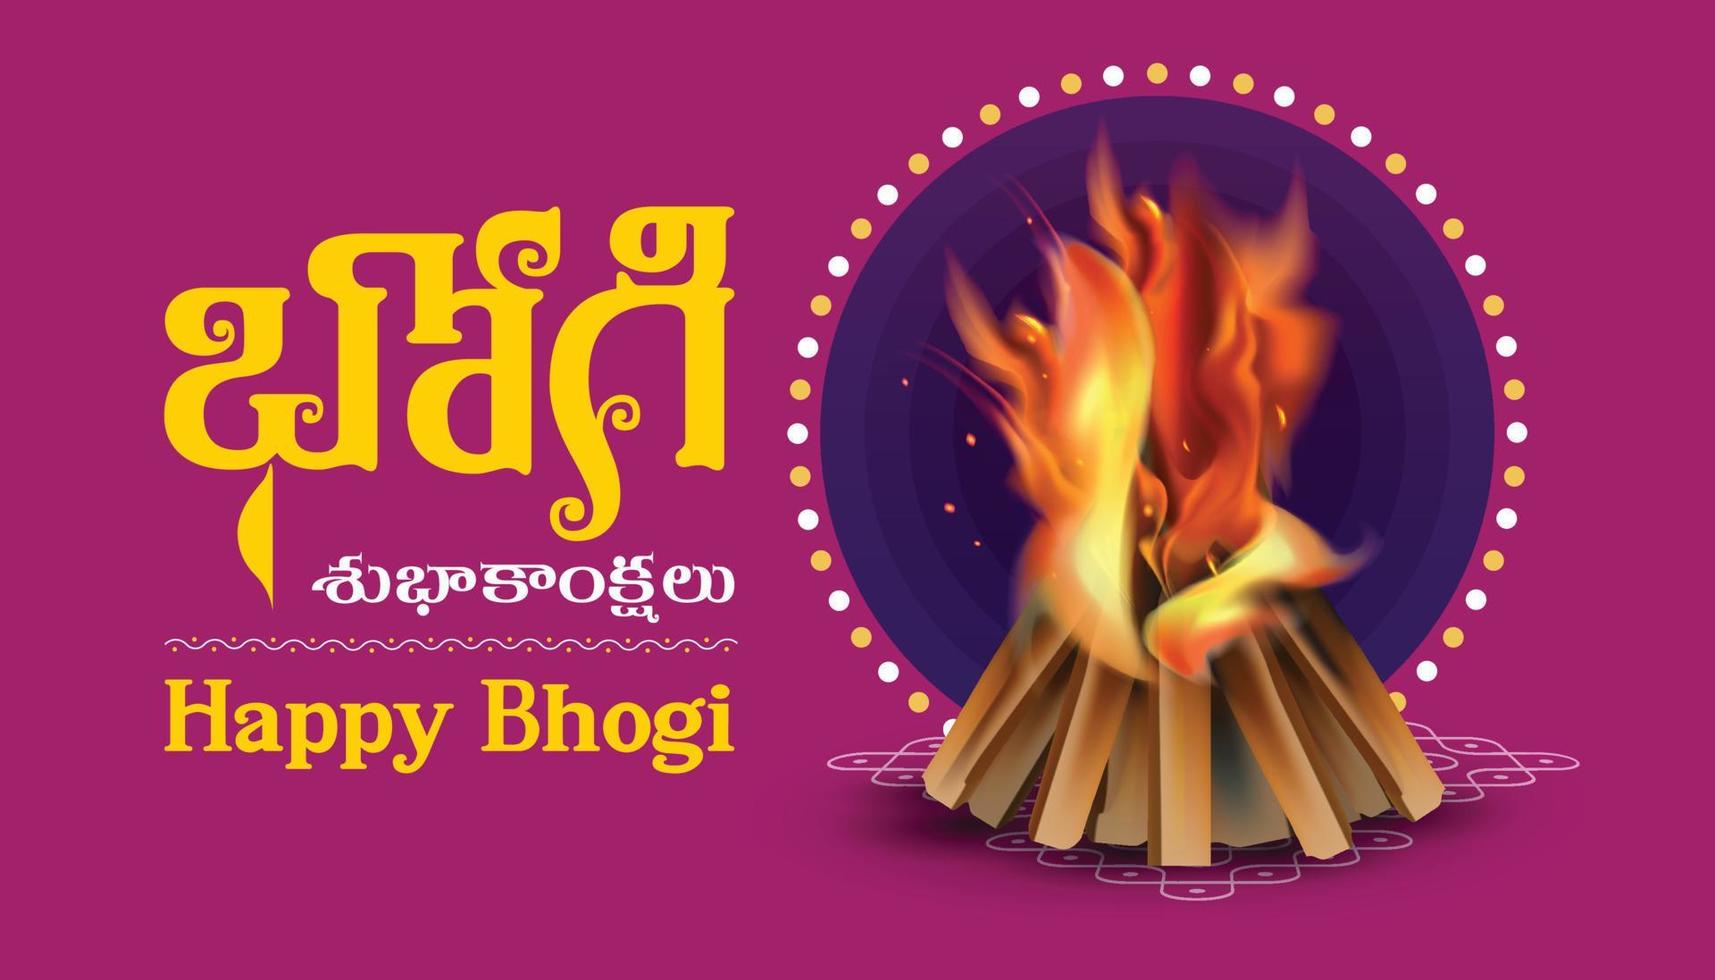 Happy Bhogi vector illusttration written in regional language ...